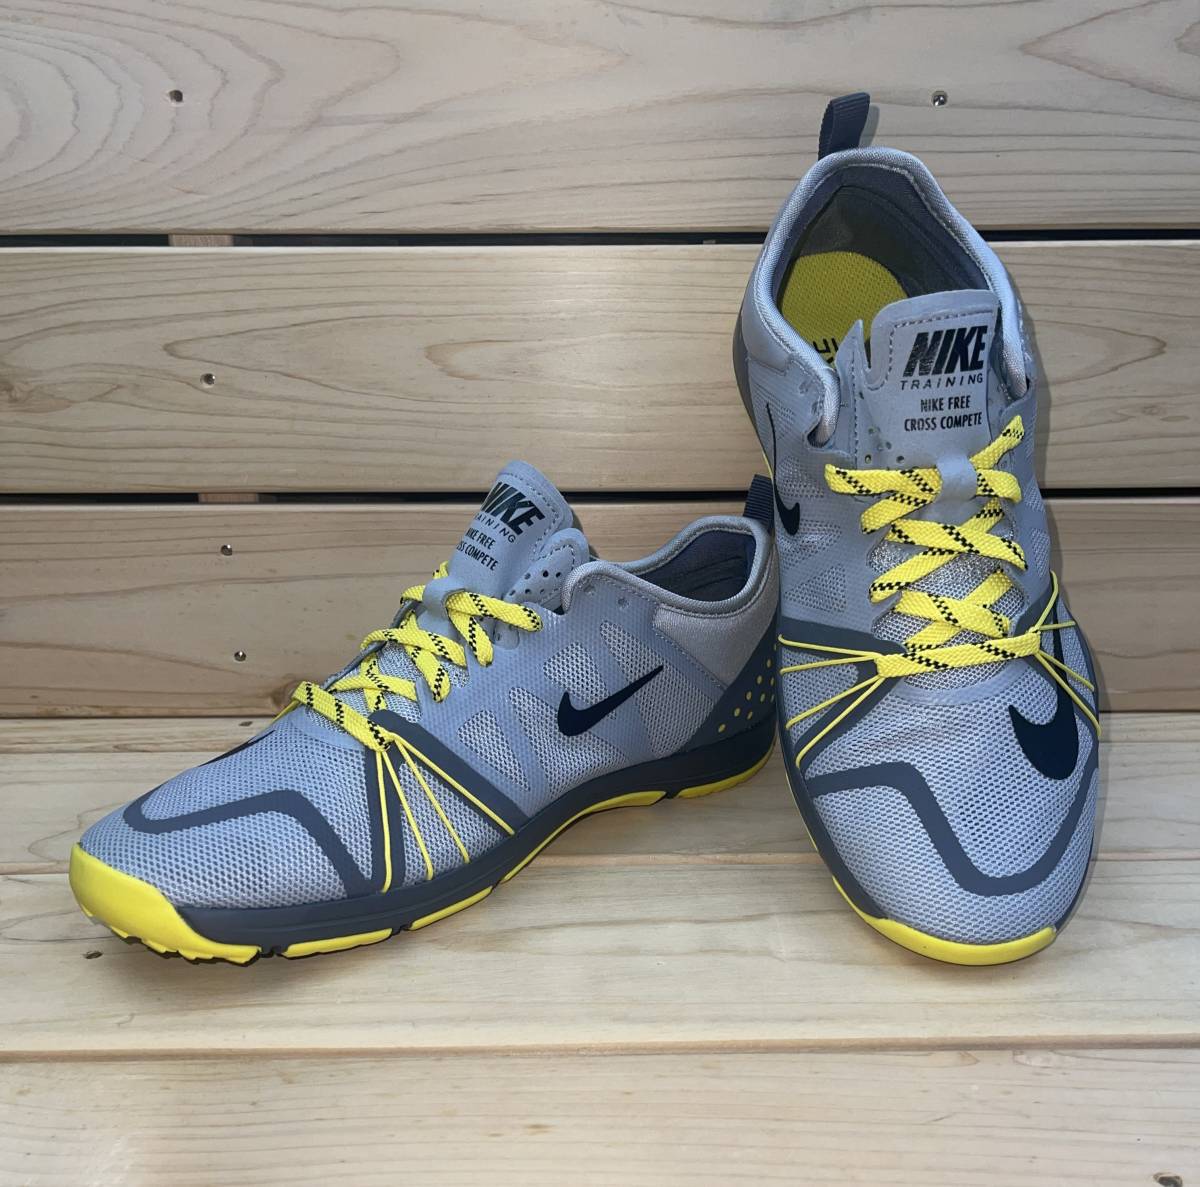  Nike 23cm freak Rothco mpi-towi мужской серый желтый NIKE FREE CROSS COMPETE женский тренировочная обувь ②